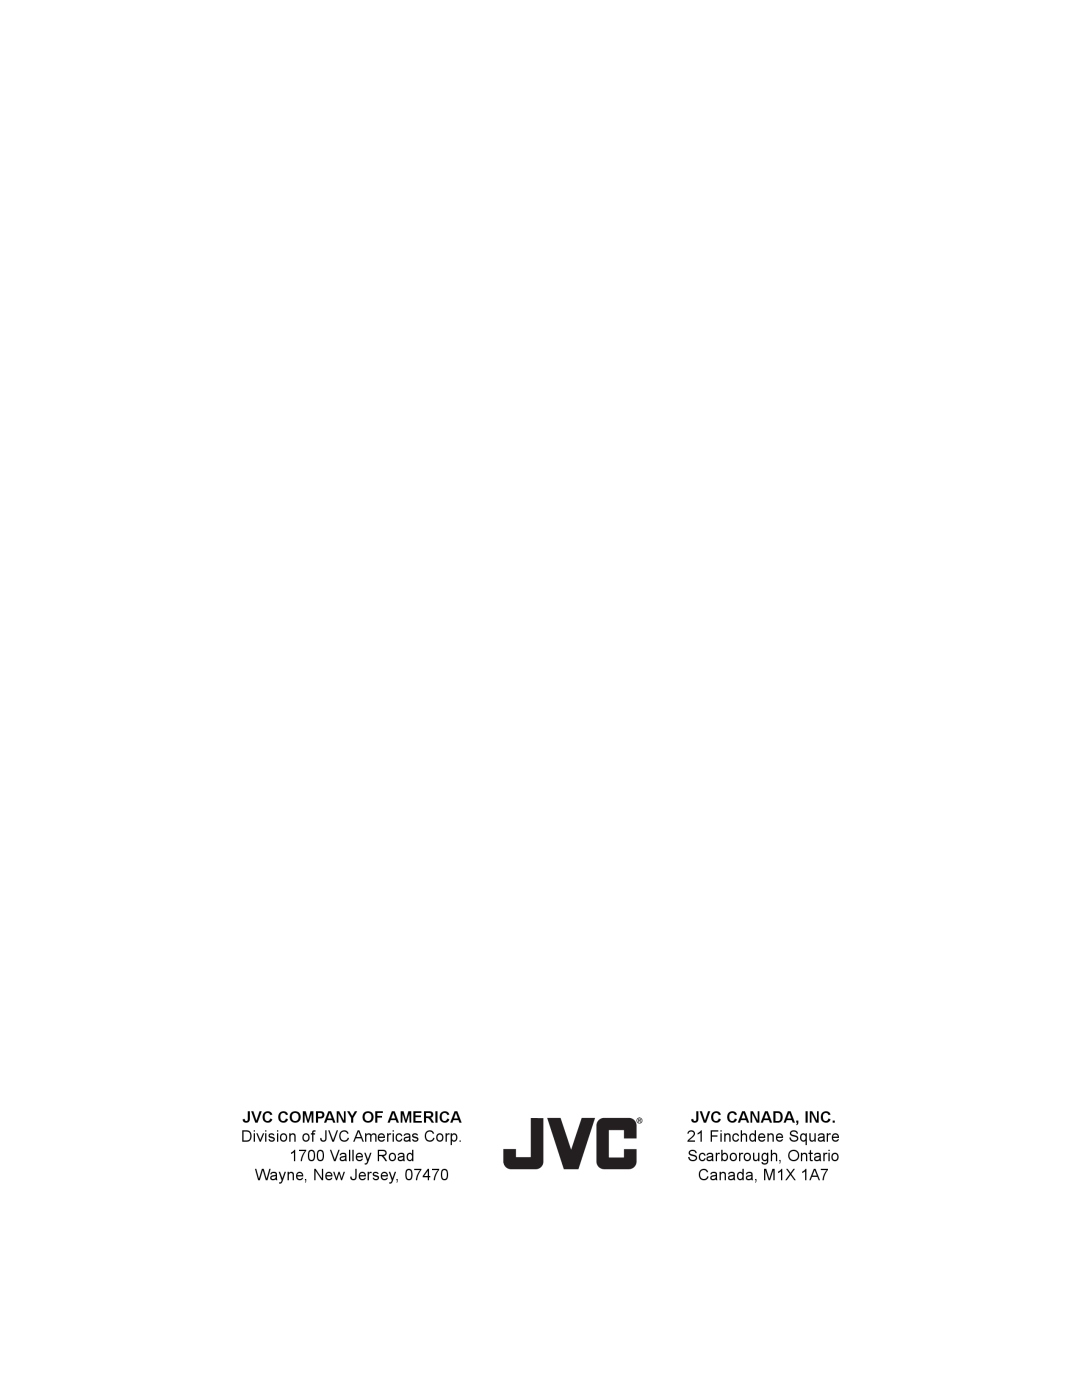 JVC AV 20FA44 manual Jvc Company Of America, Jvc Canada, Inc, Canada, M1X 1A7 